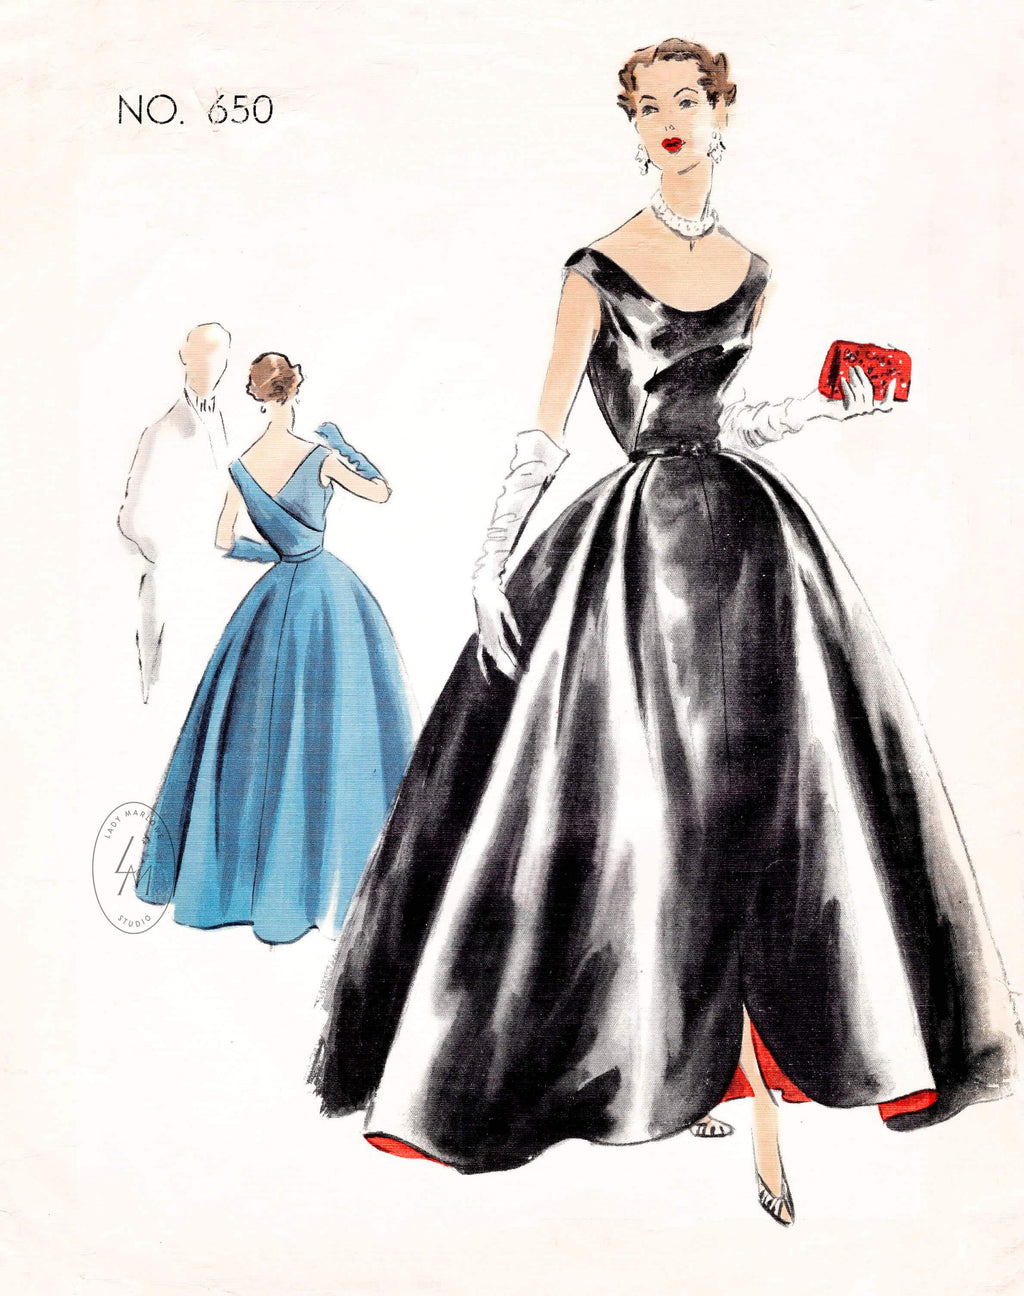 1950s dress patterns